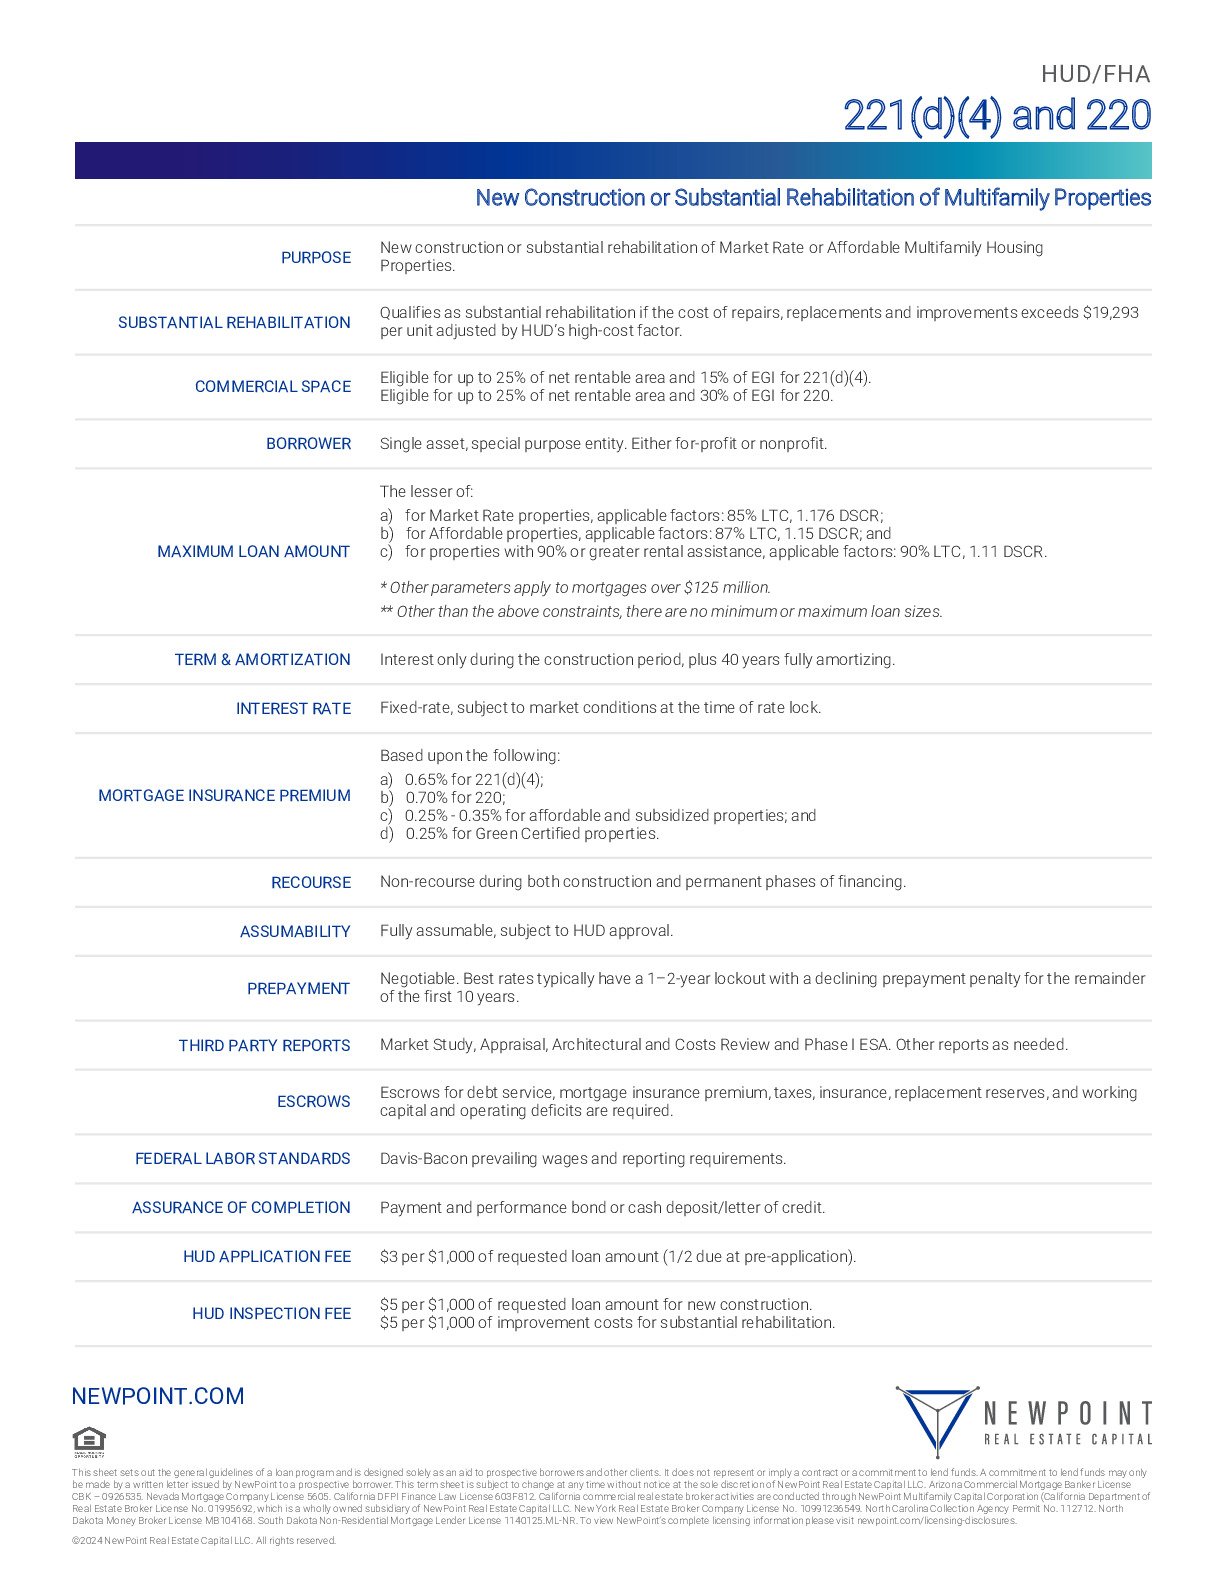 NewPoint_HUD-FHA_221(d)(4) and 220.pdf